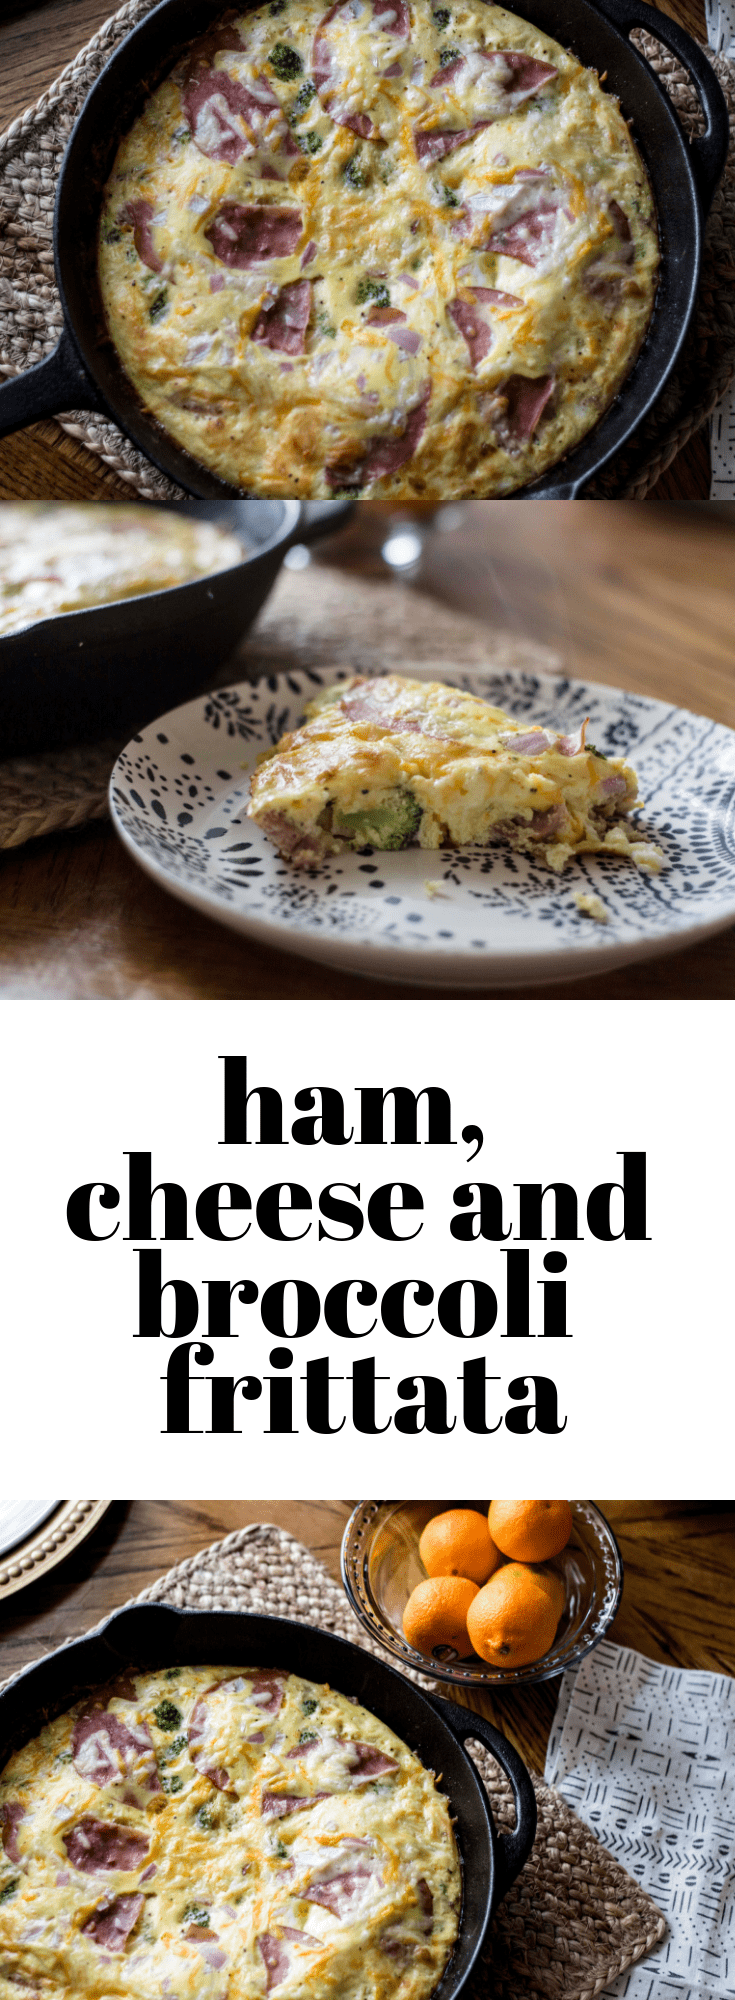 Ham, cheese and broccoli frittata